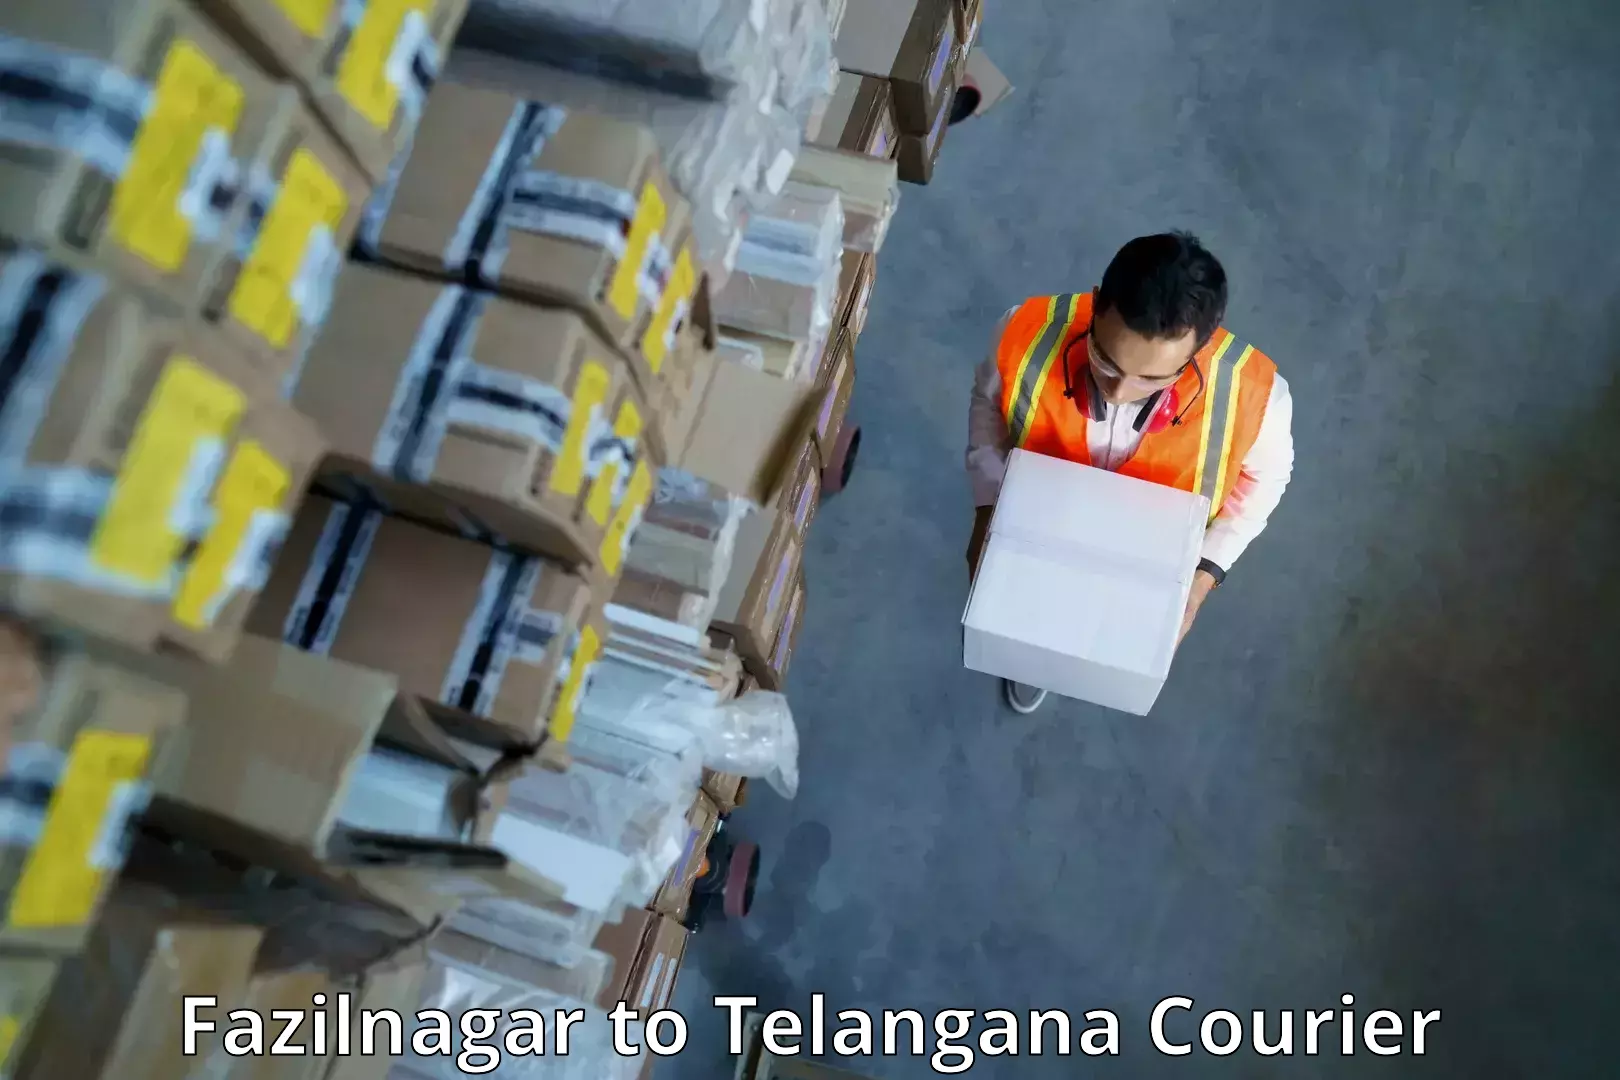 Courier service innovation Fazilnagar to Chintoor